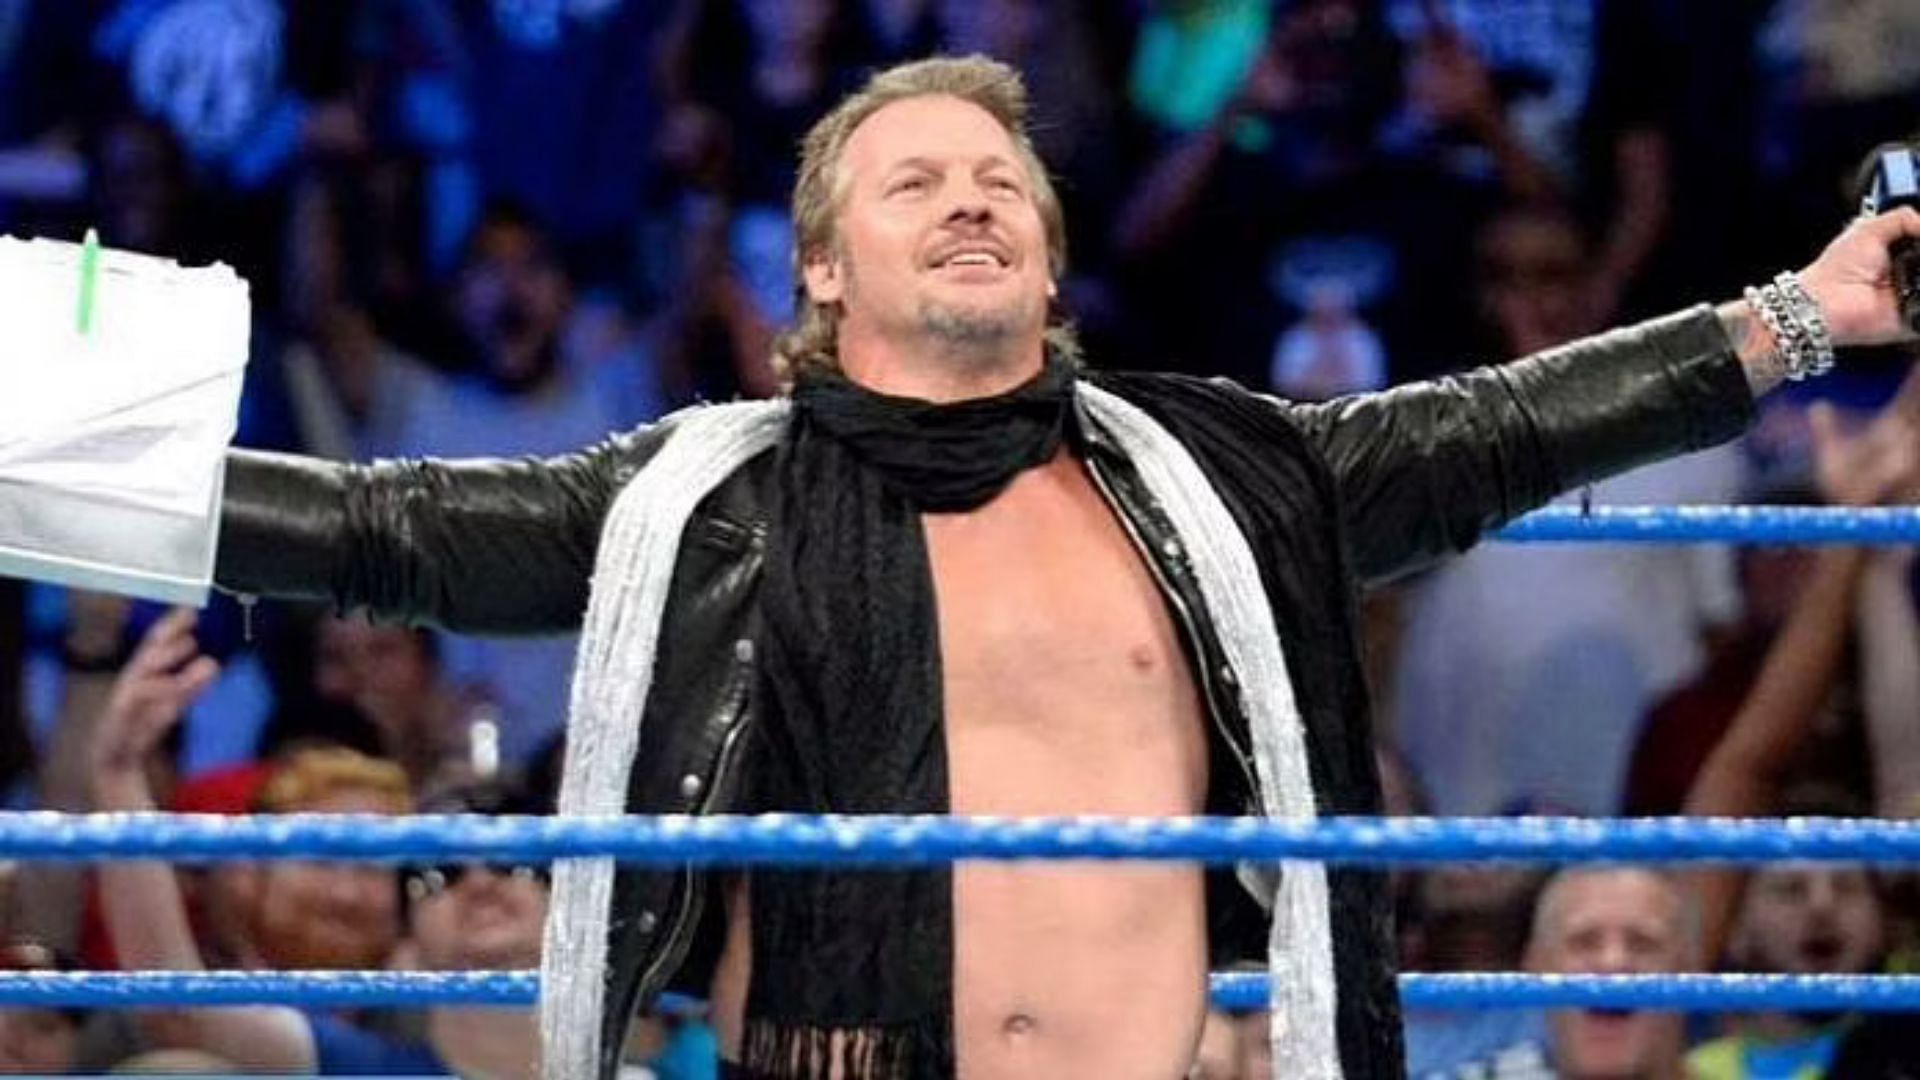 Jericho leaving WWE was a big surprise